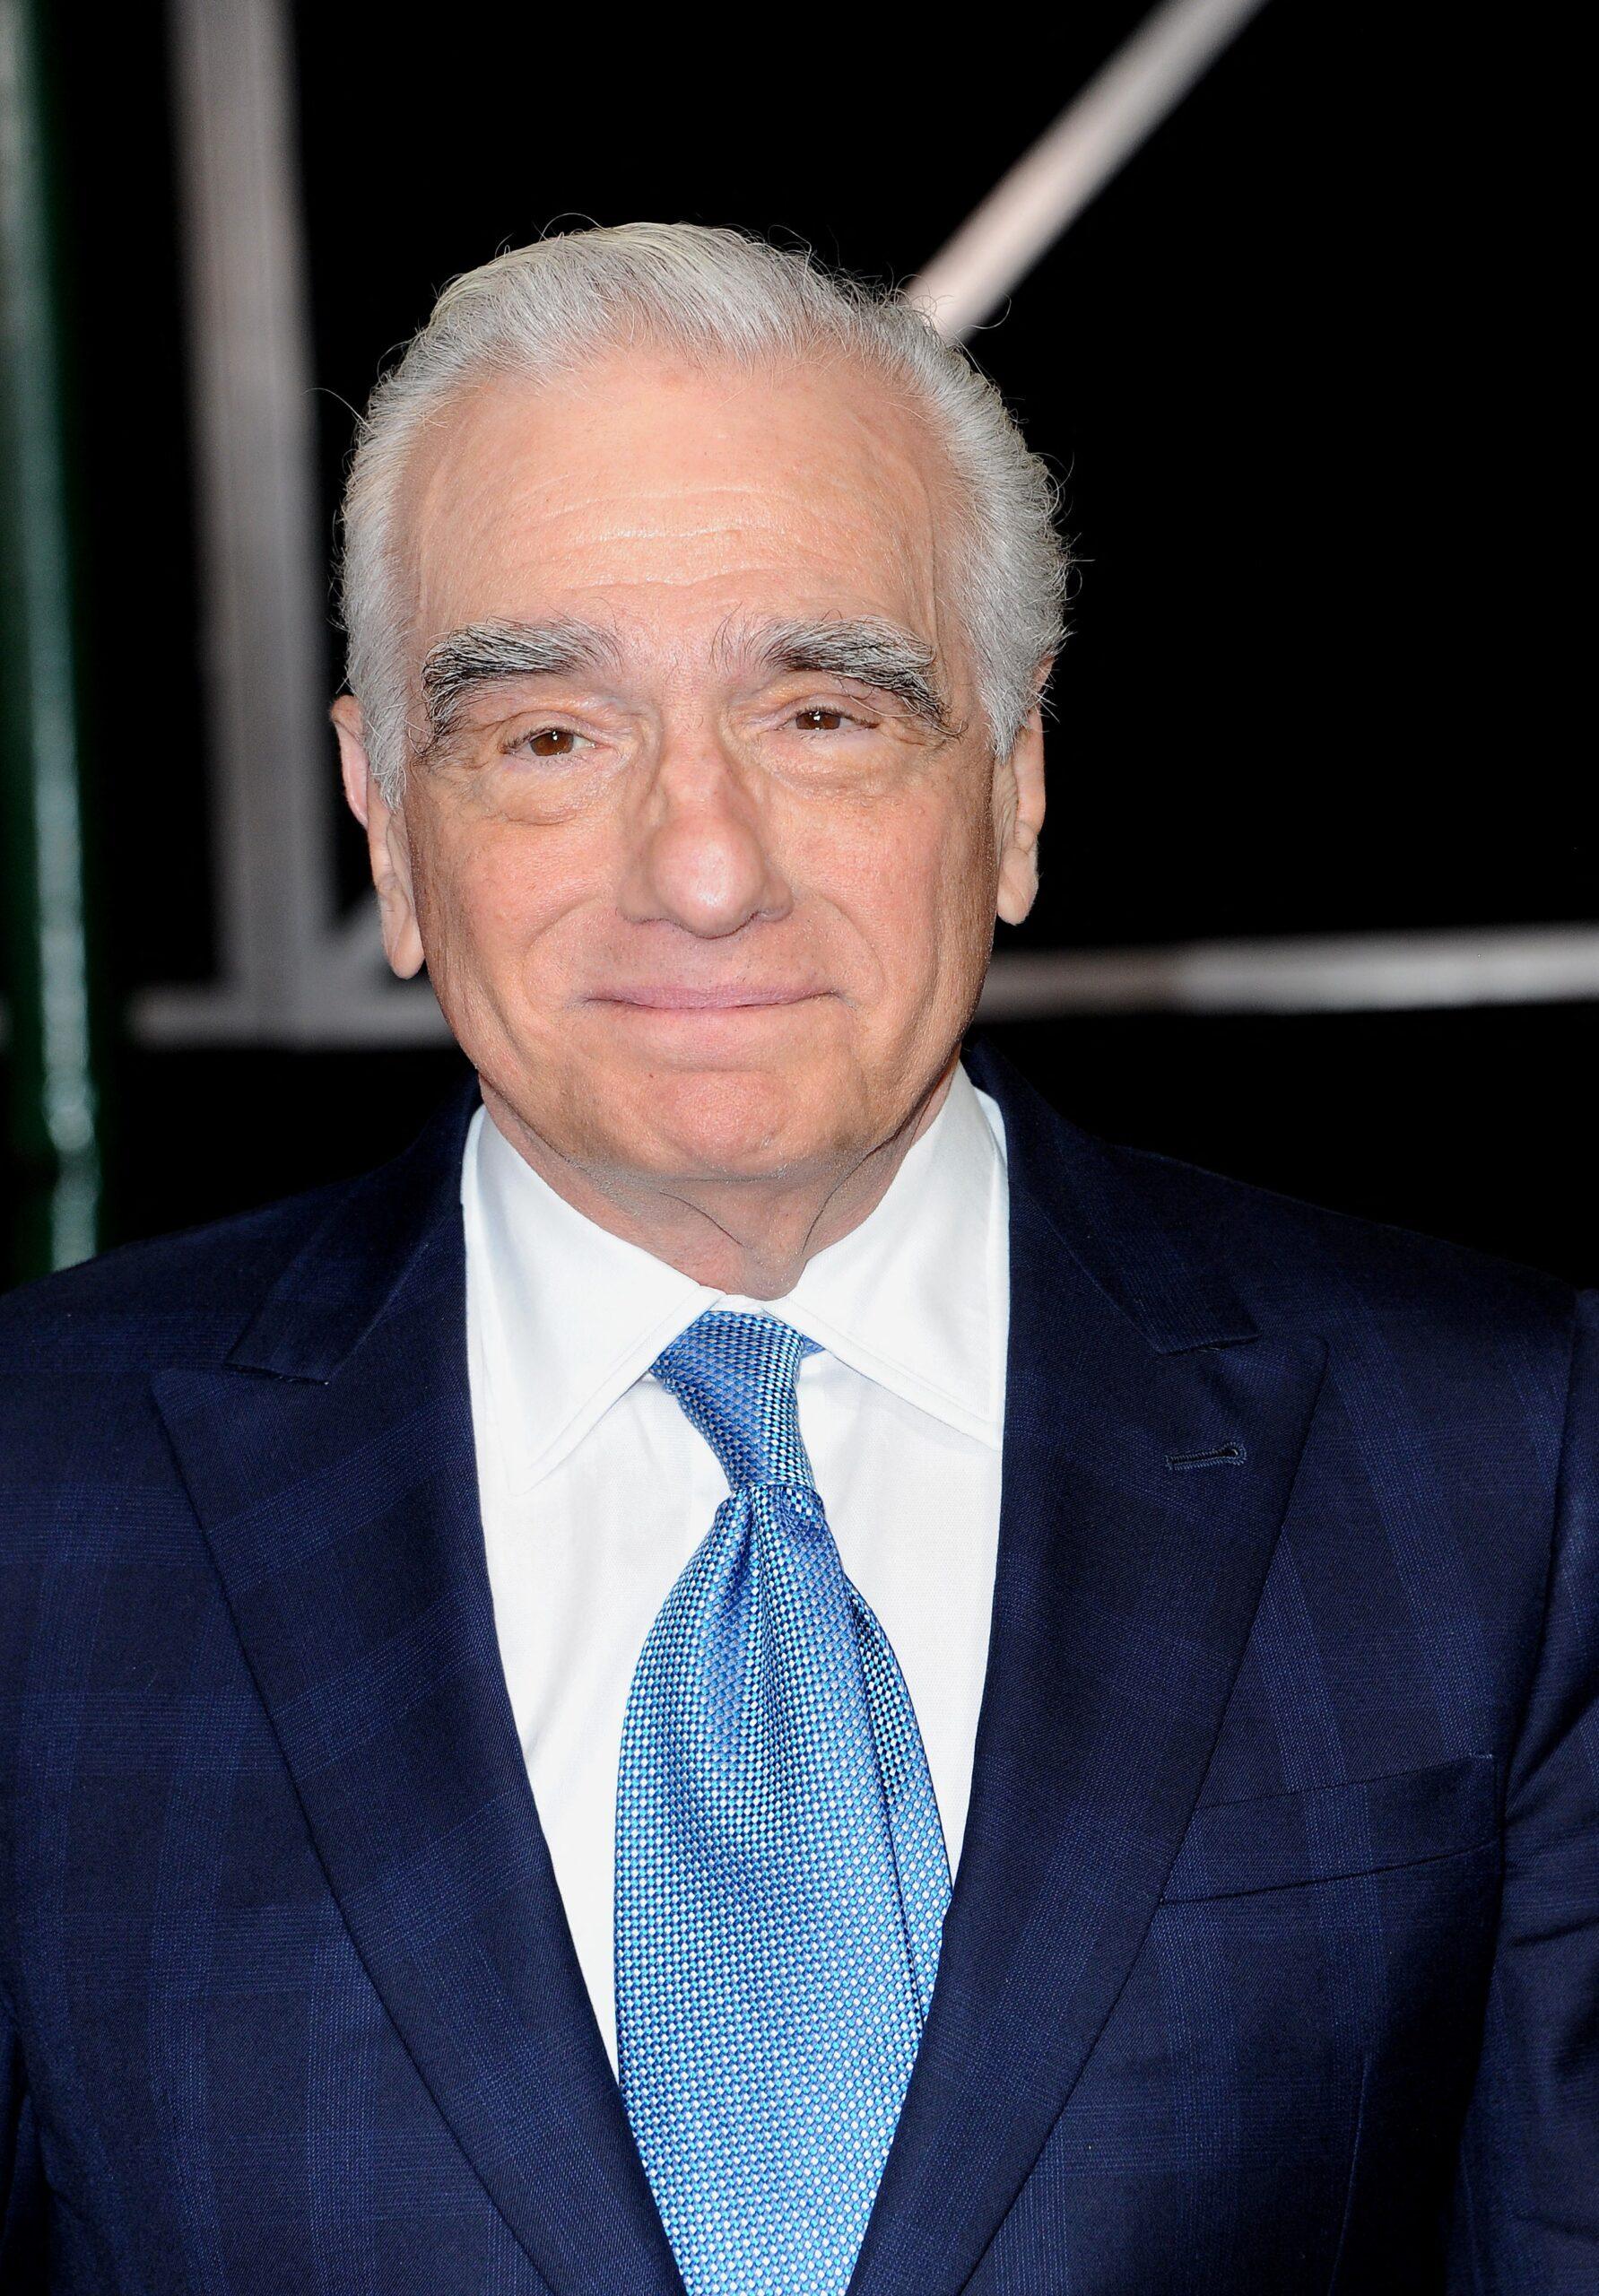 Martin Scorsese at the Los Angeles premiere of 'The Irishman'